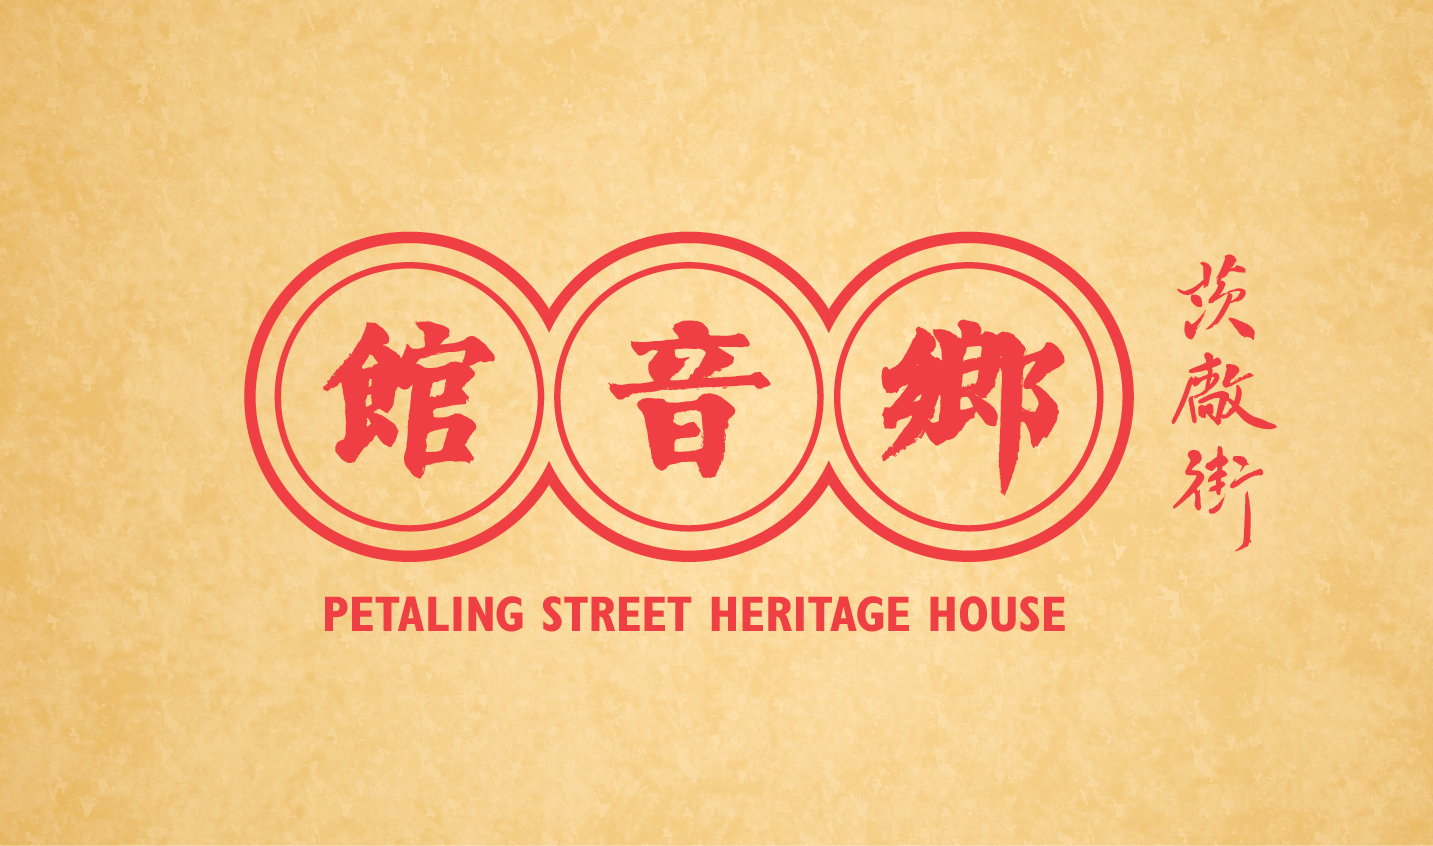 Petaling Street Heritage House